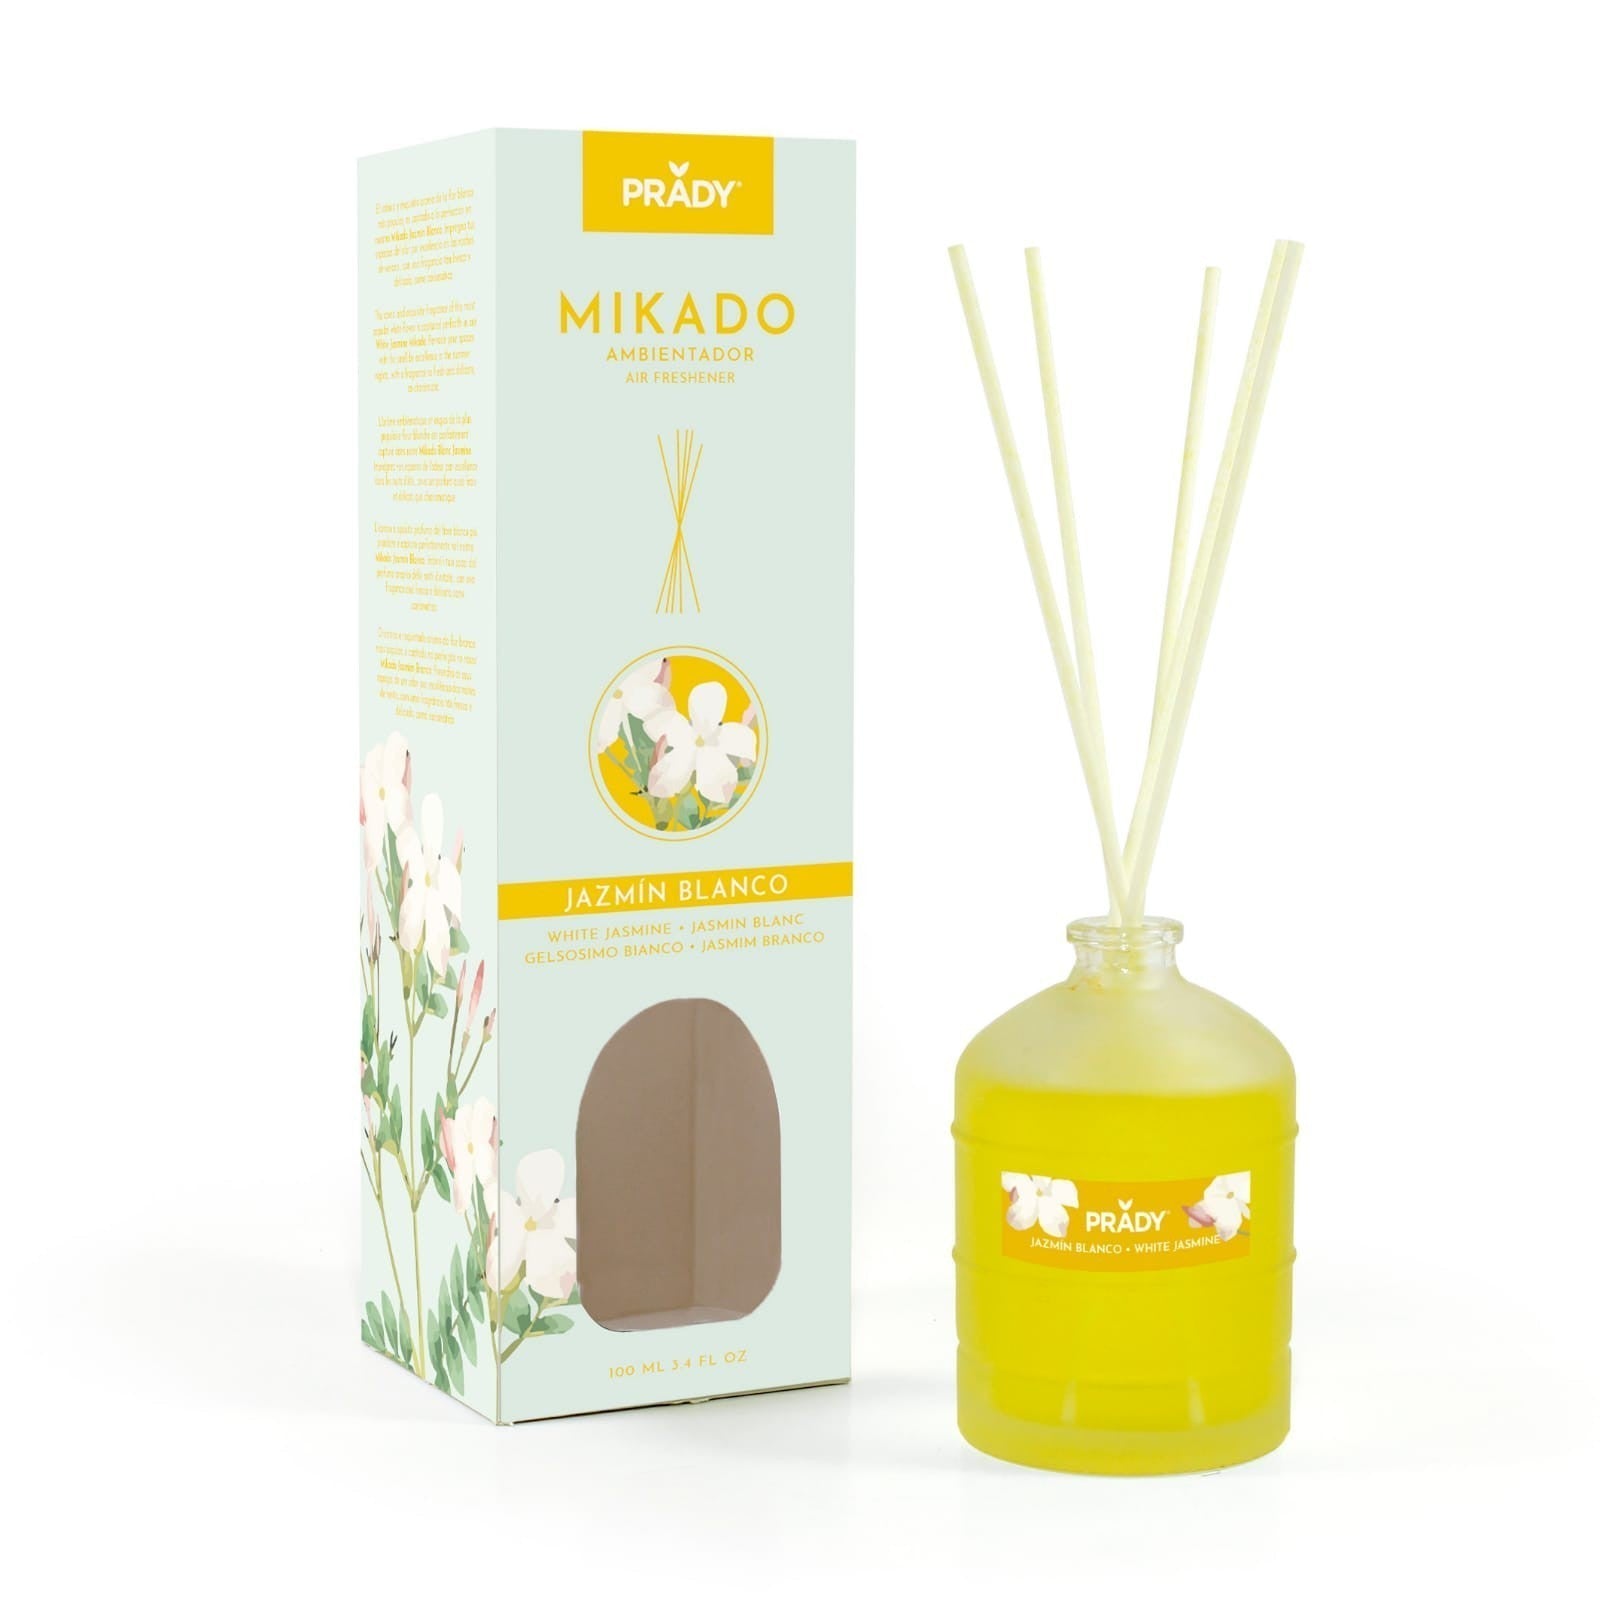 MIKADO "RITUAL SPA" 100 ml de perfumes prady